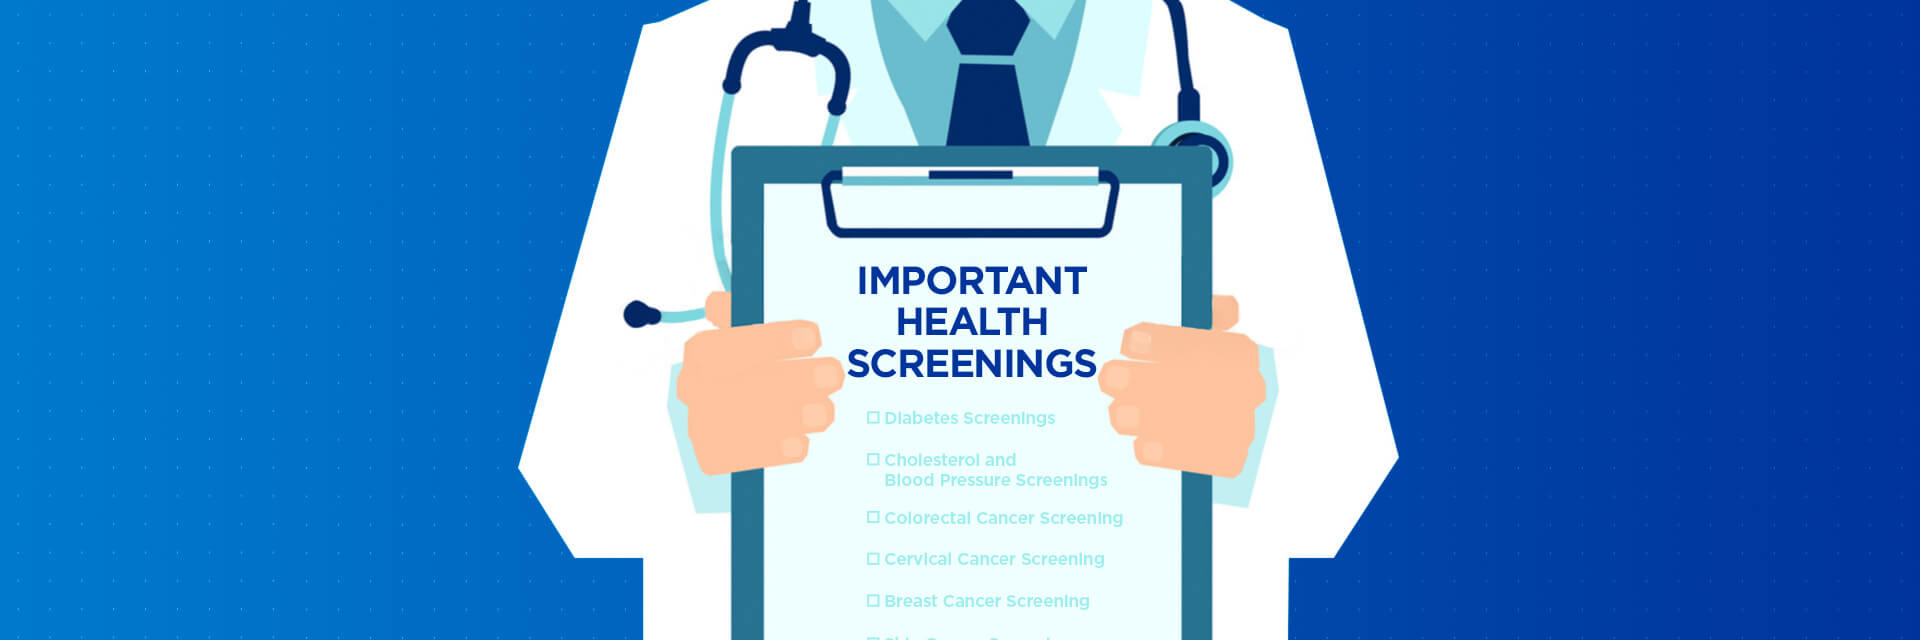 Graphic Important health screenings